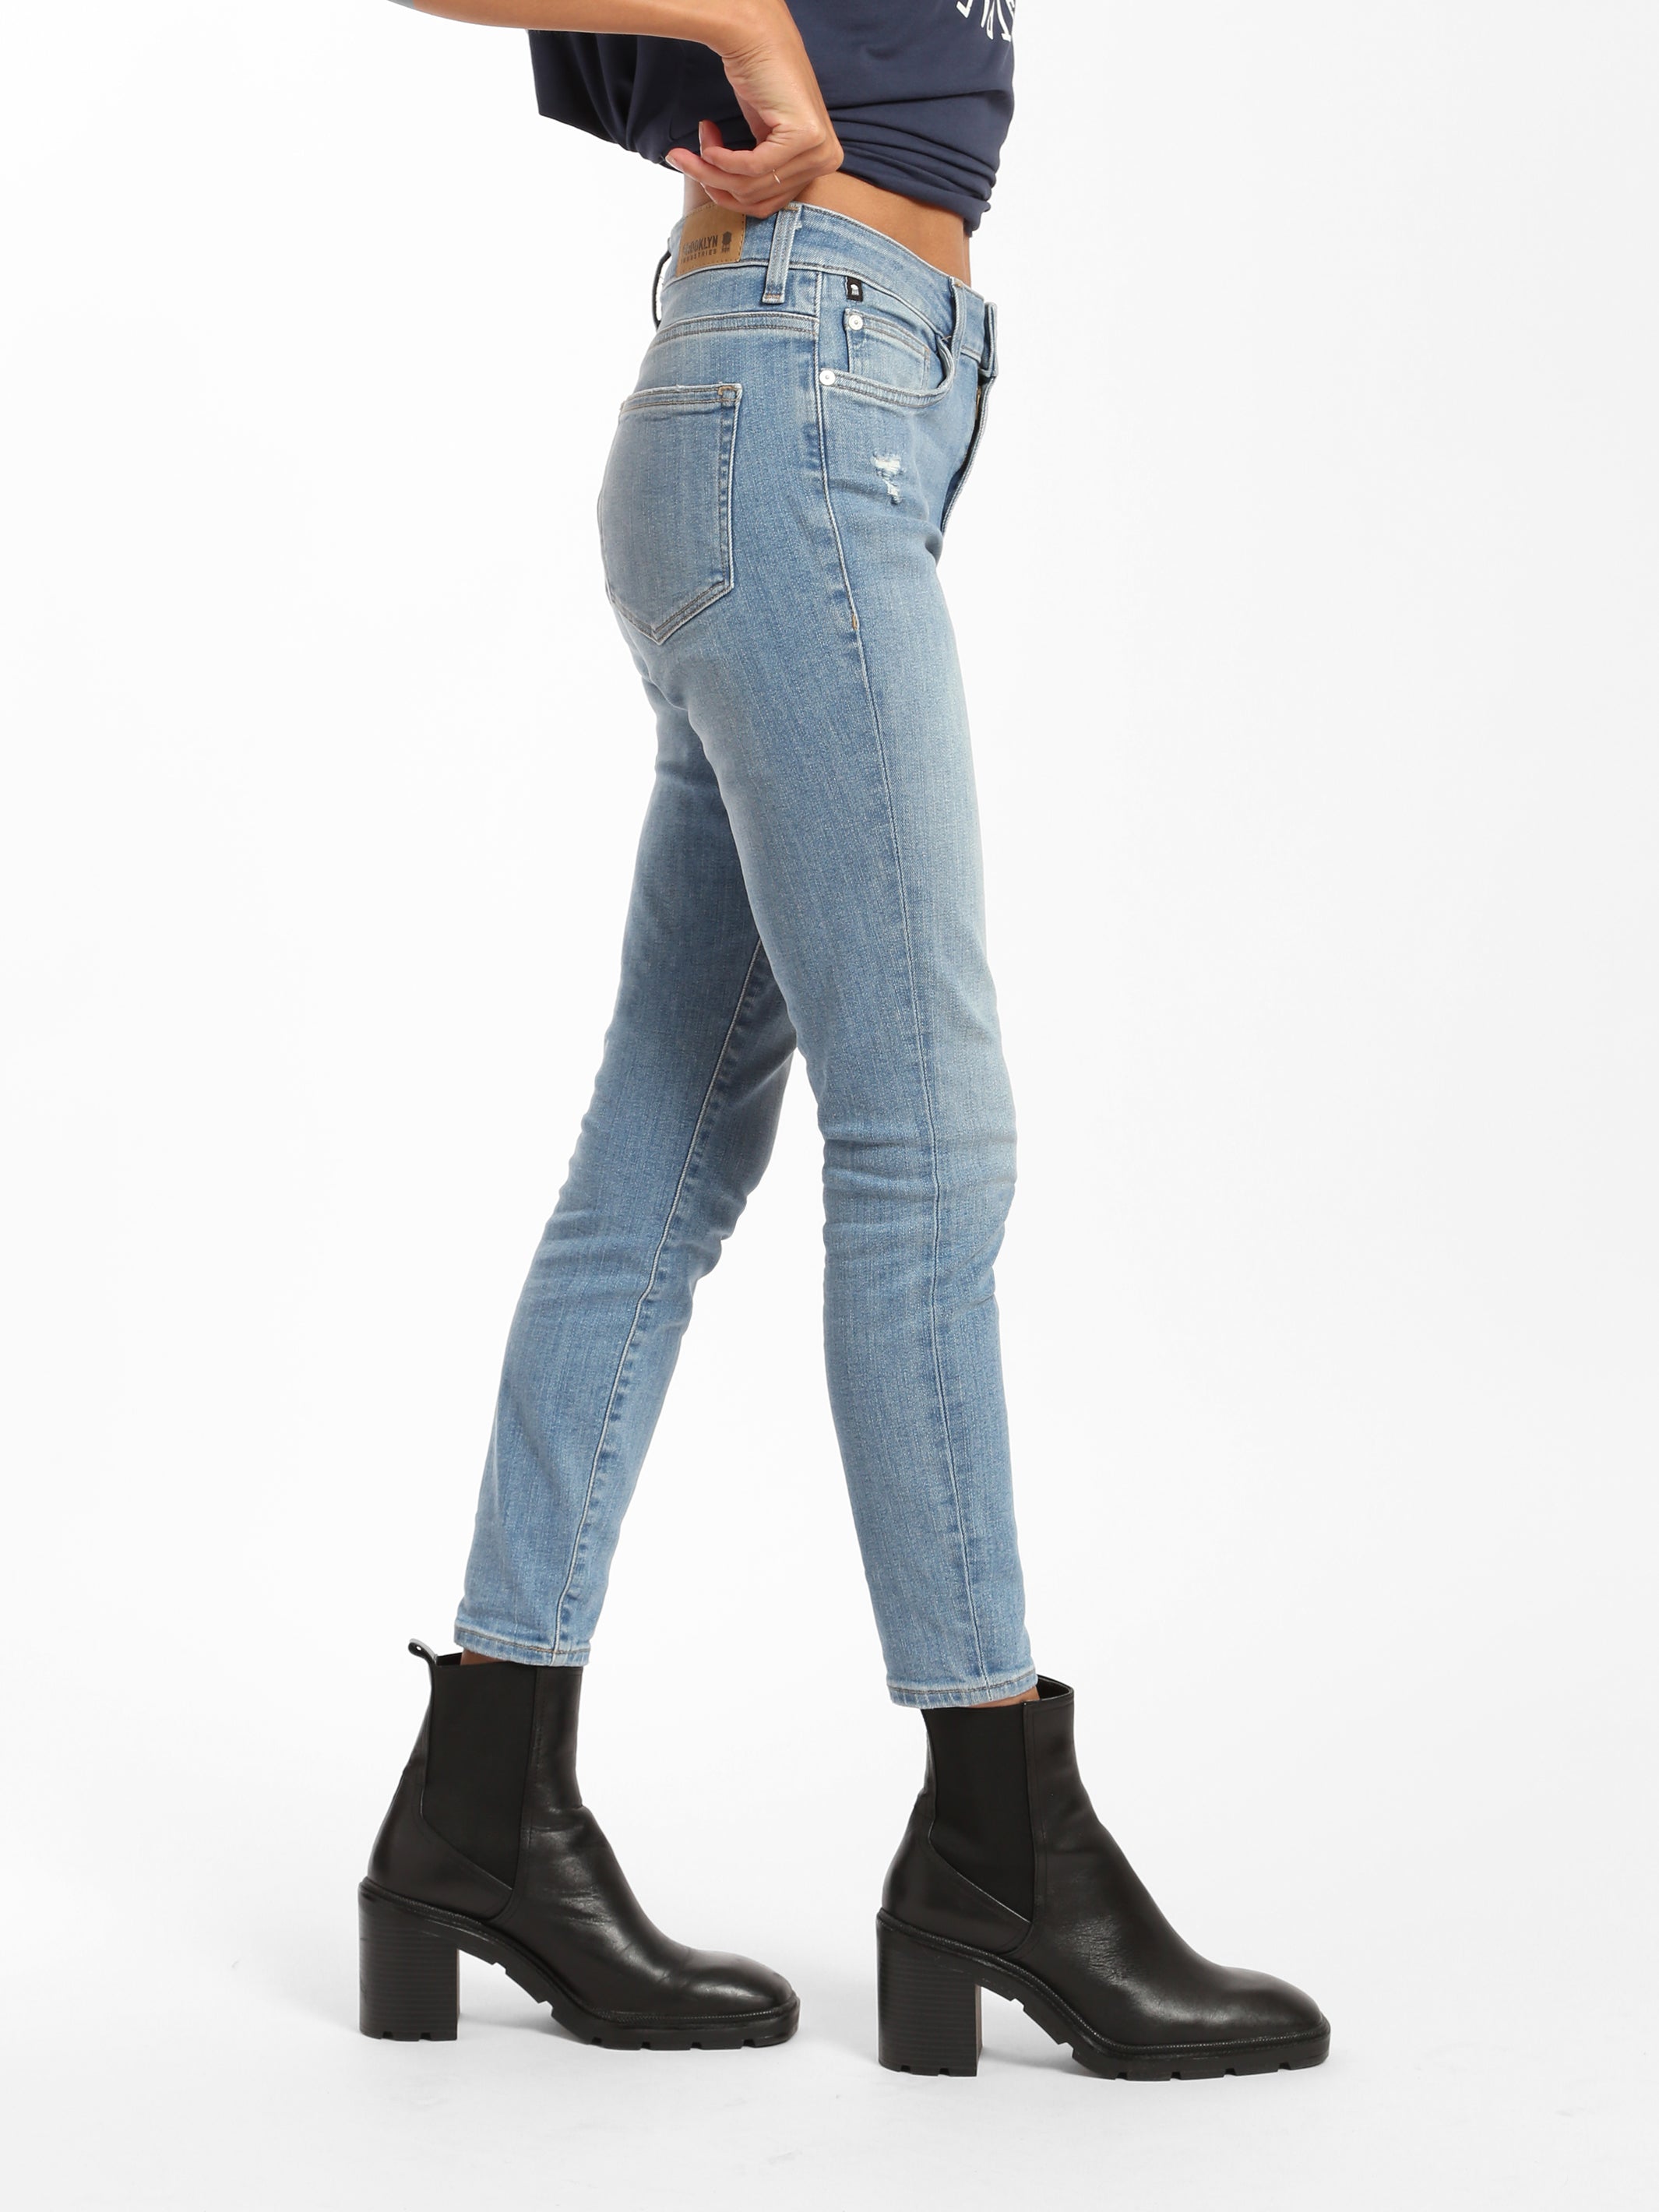 Coco High Rise Skinny Jeans in Light Denim - BROOKLYN INDUSTRIES